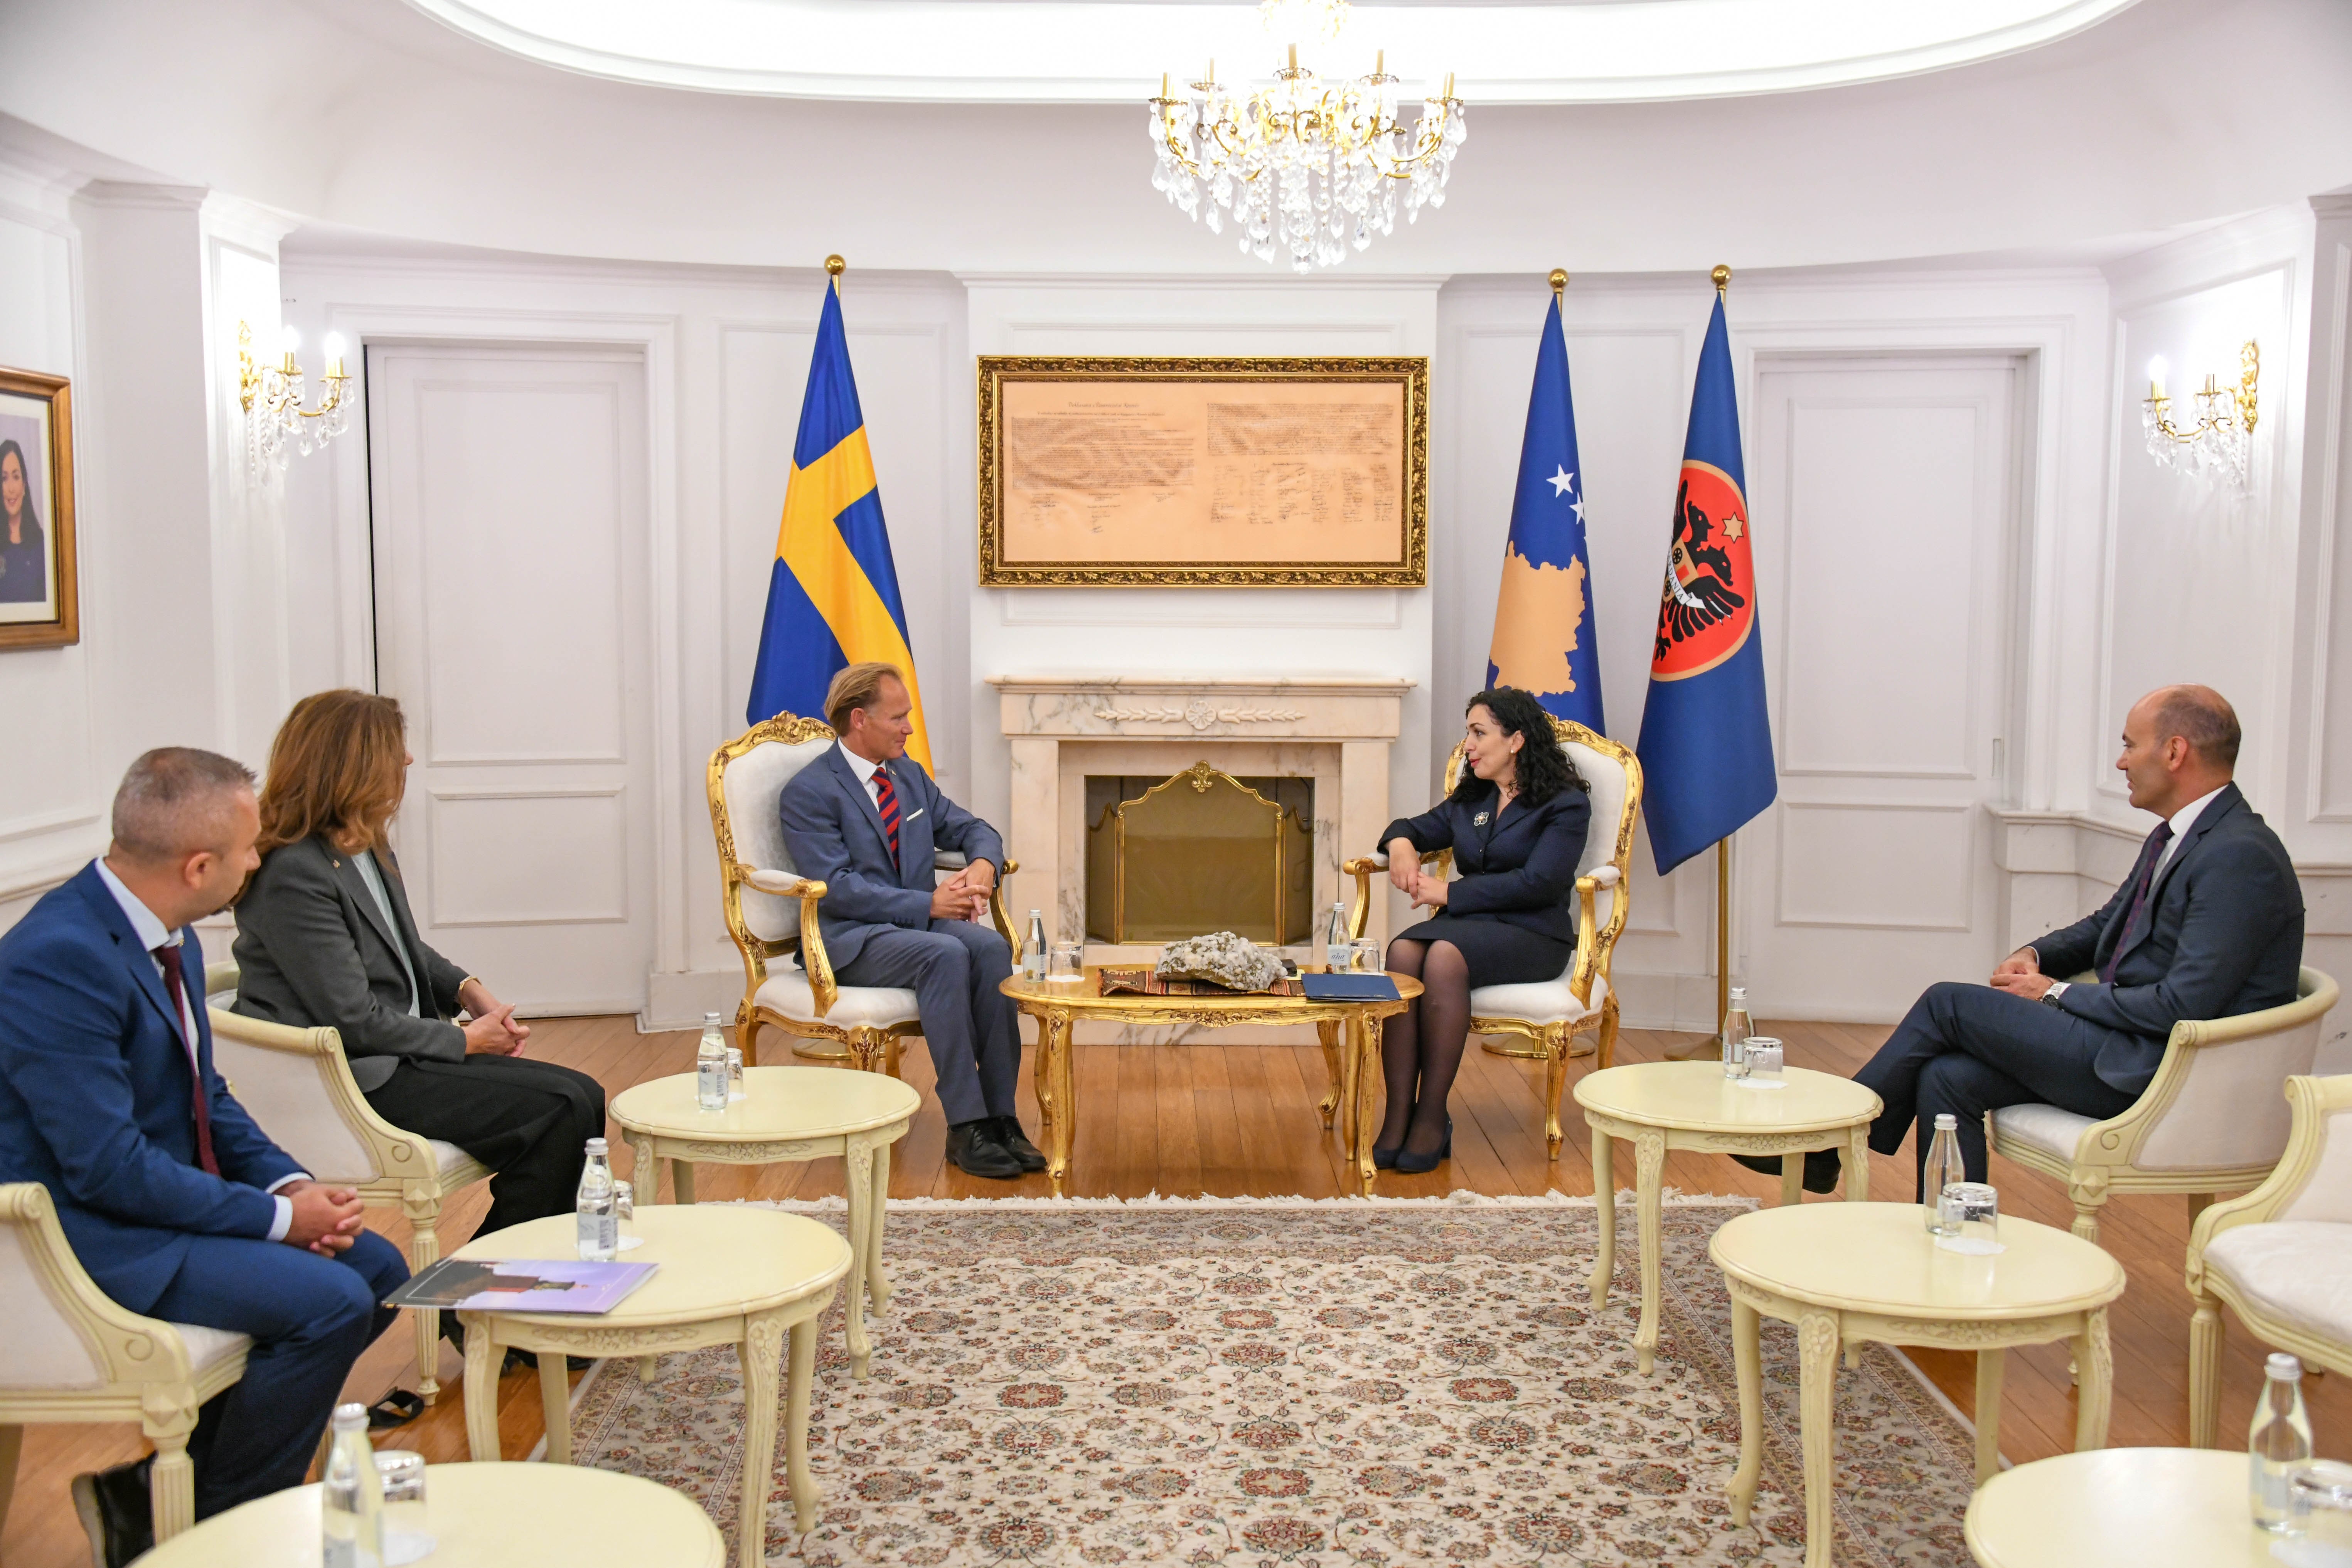 Presidentja Osmani pranoi letrat kredenciale nga ambasadori i Suedisë, Jonas Westerlund